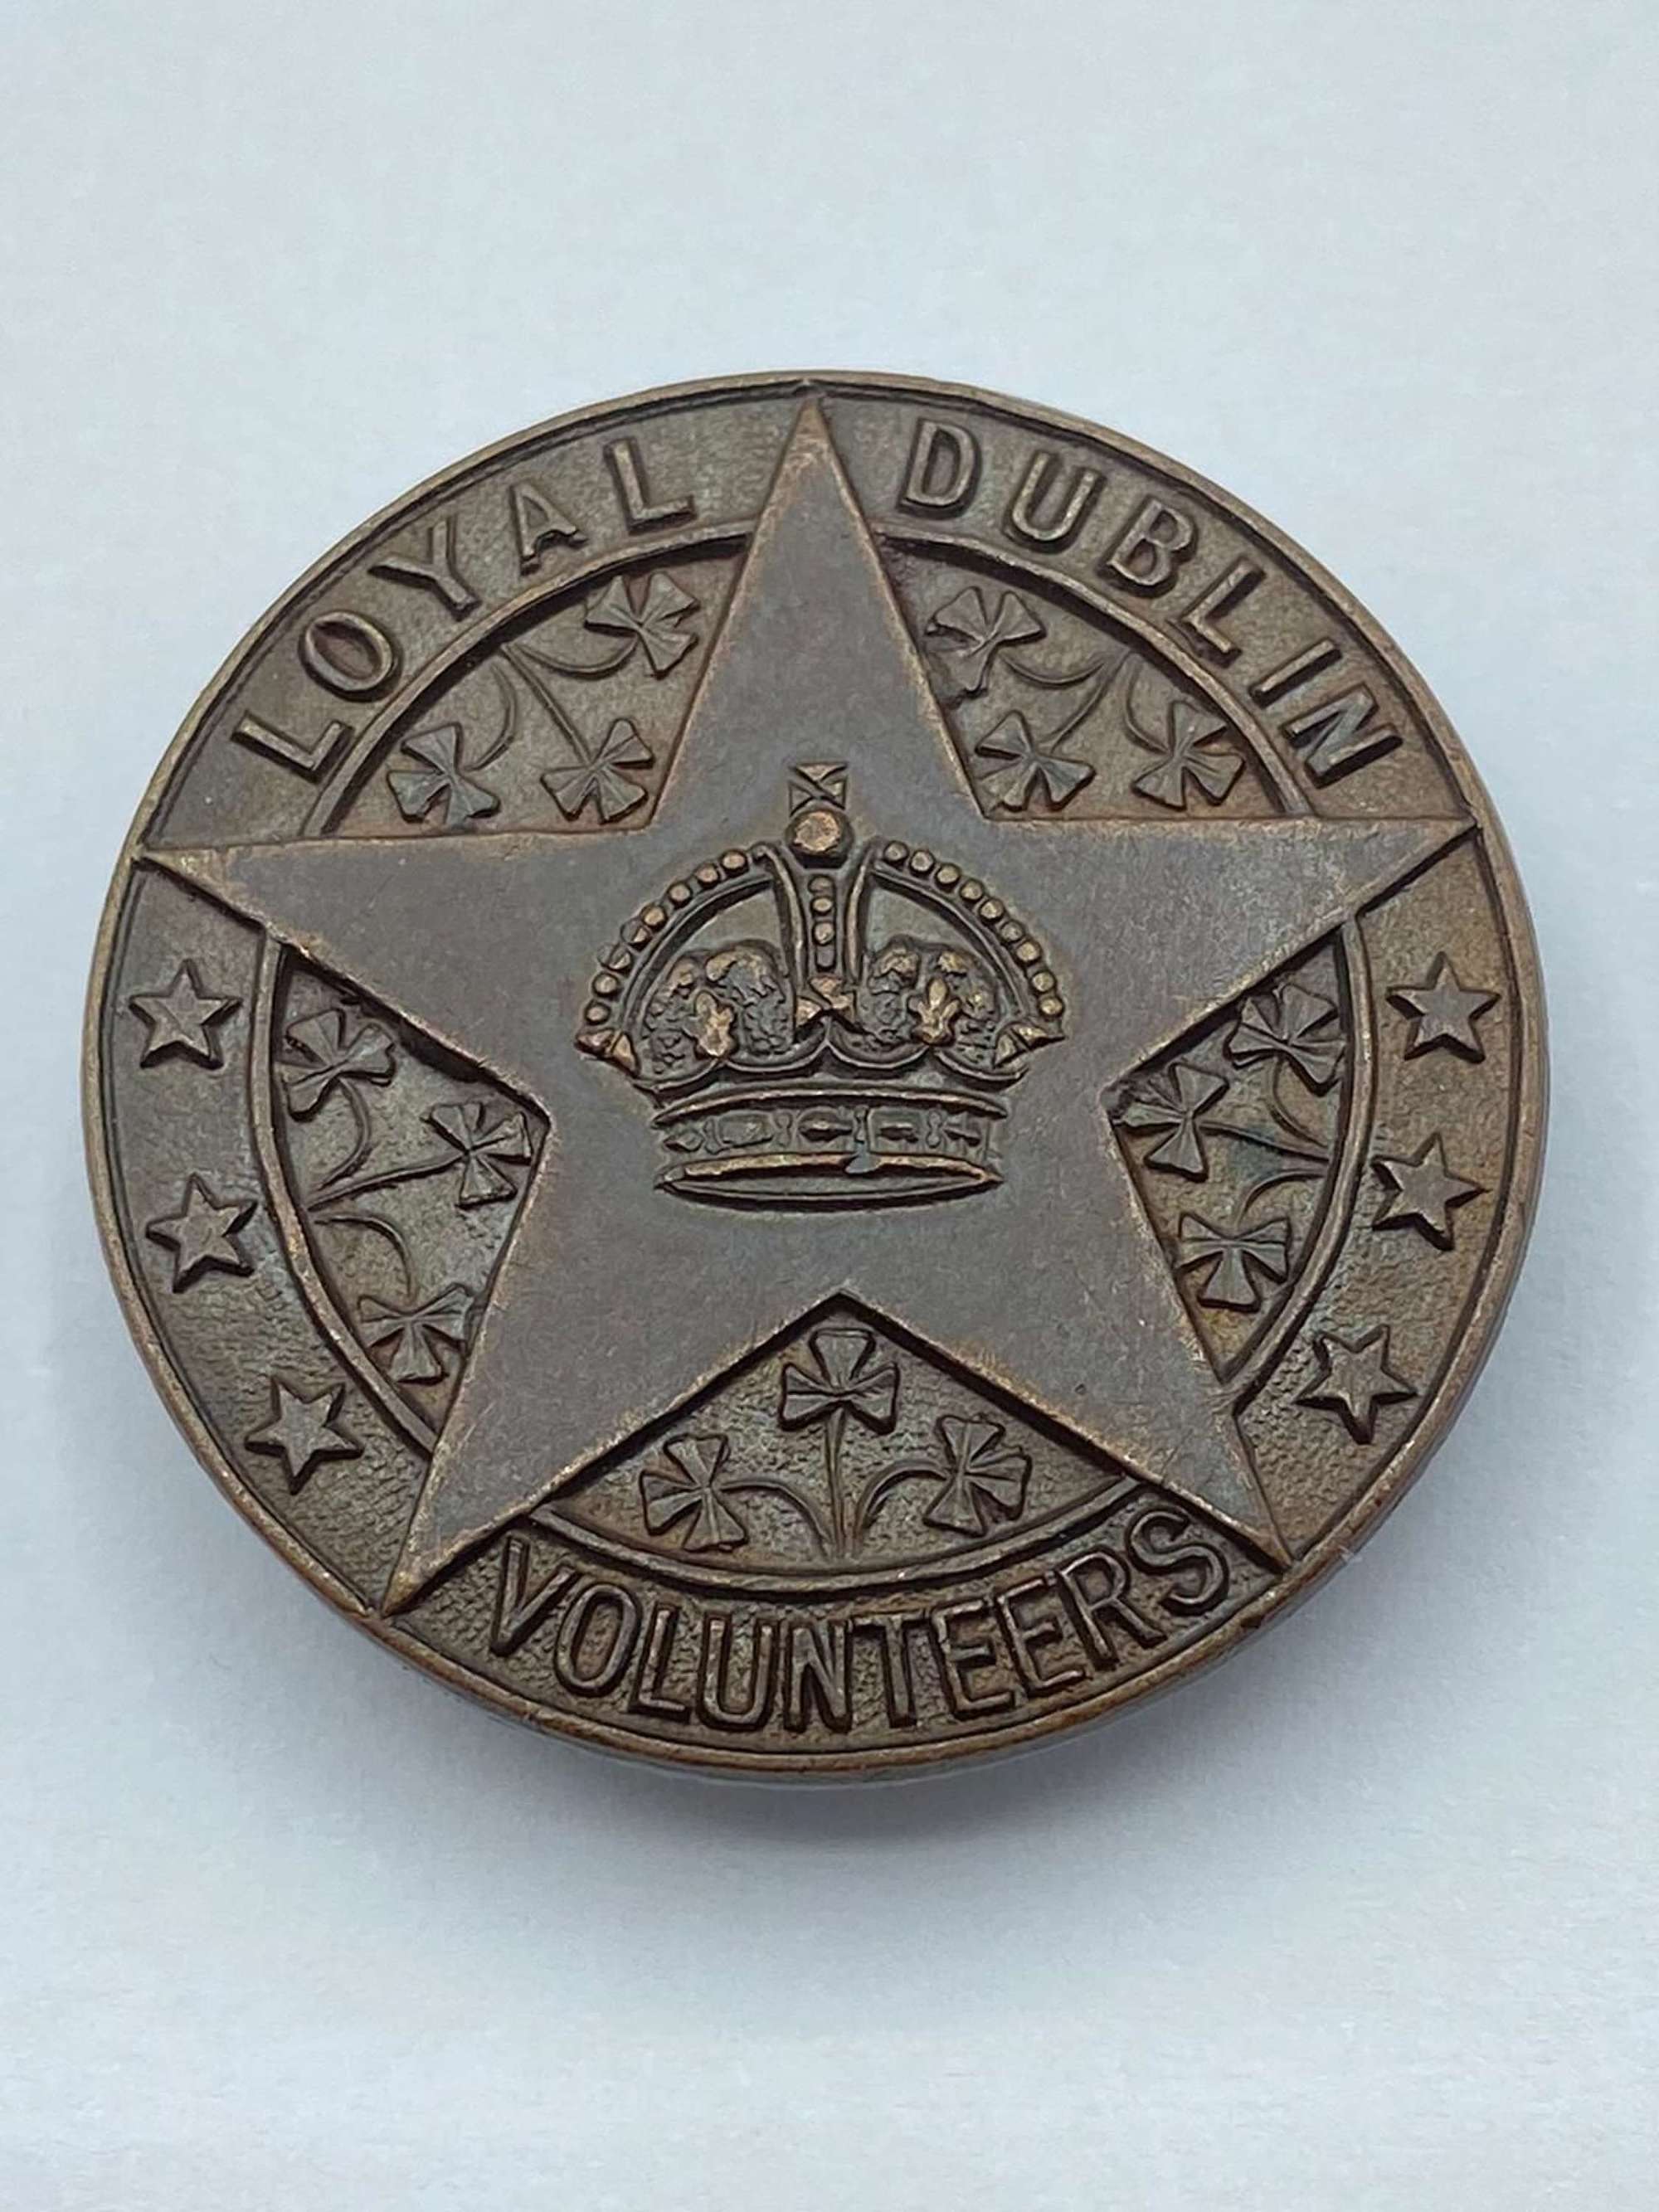 WW1 Irish Loyal Dublin Volunteers Badge Numbered 874 By Vaughtons Ltd